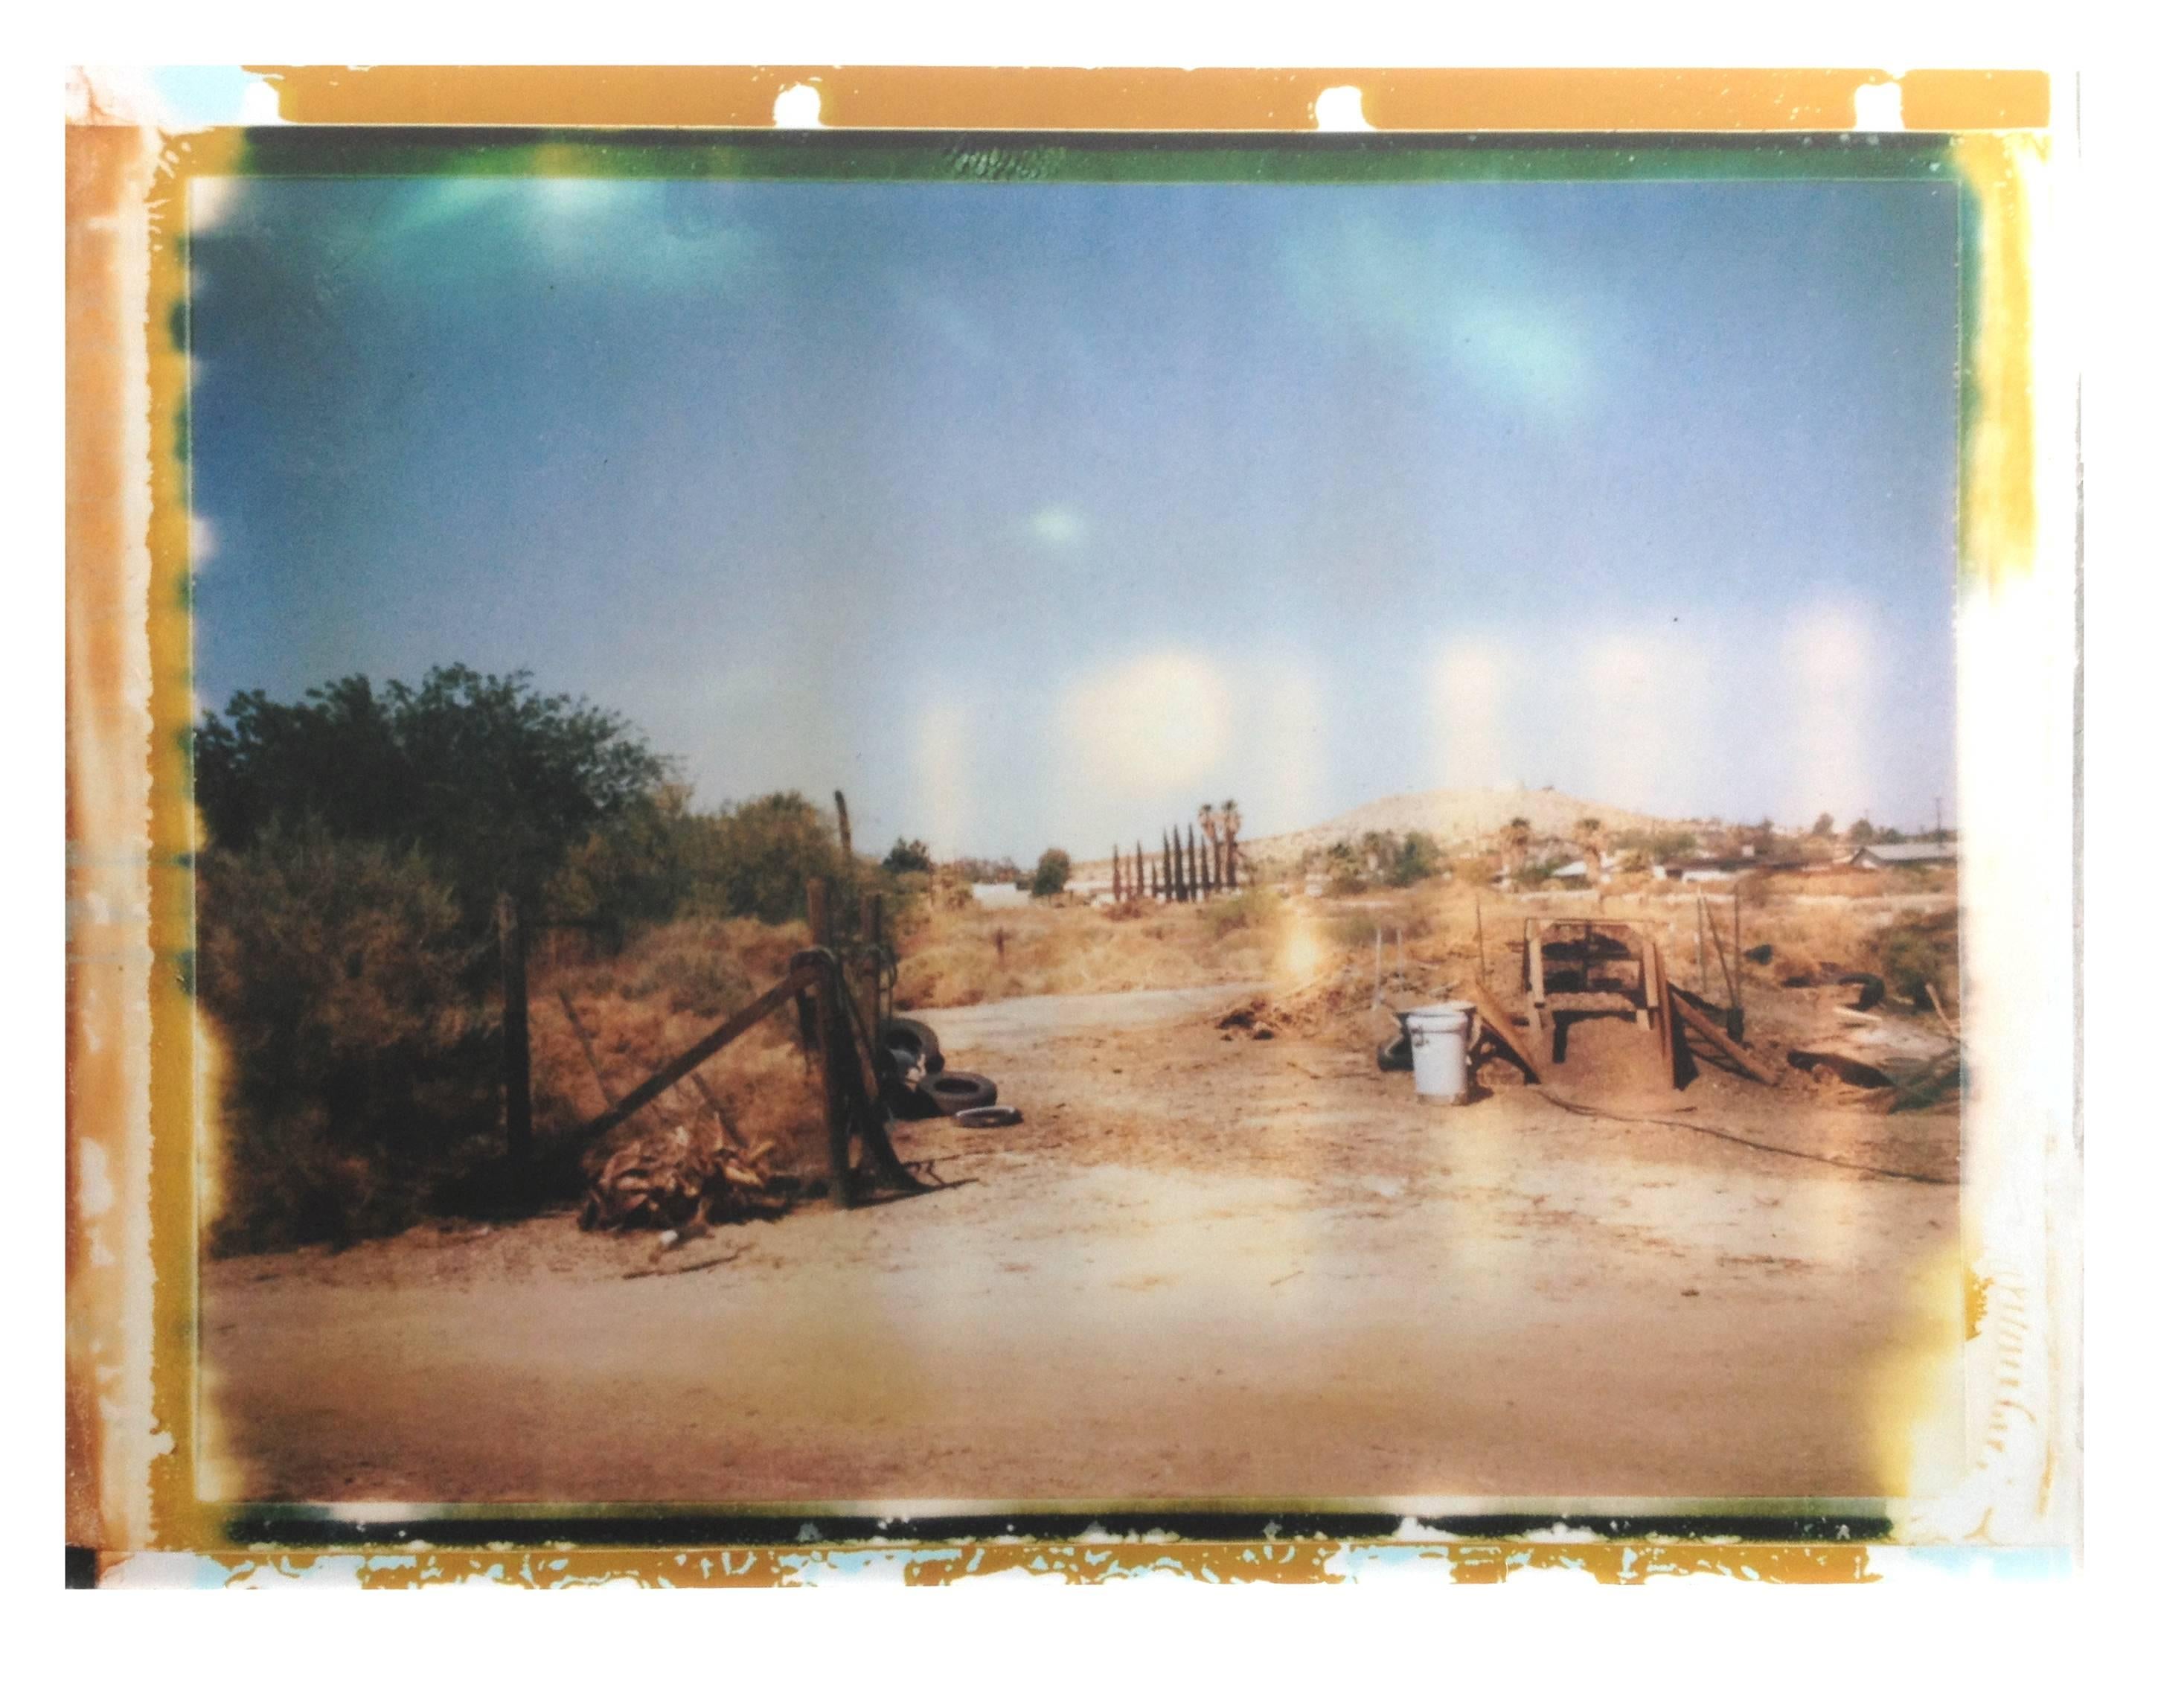 Jane's Place - 29 Palms, CA based on a Polaroid Original  - Gray Landscape Photograph by Stefanie Schneider